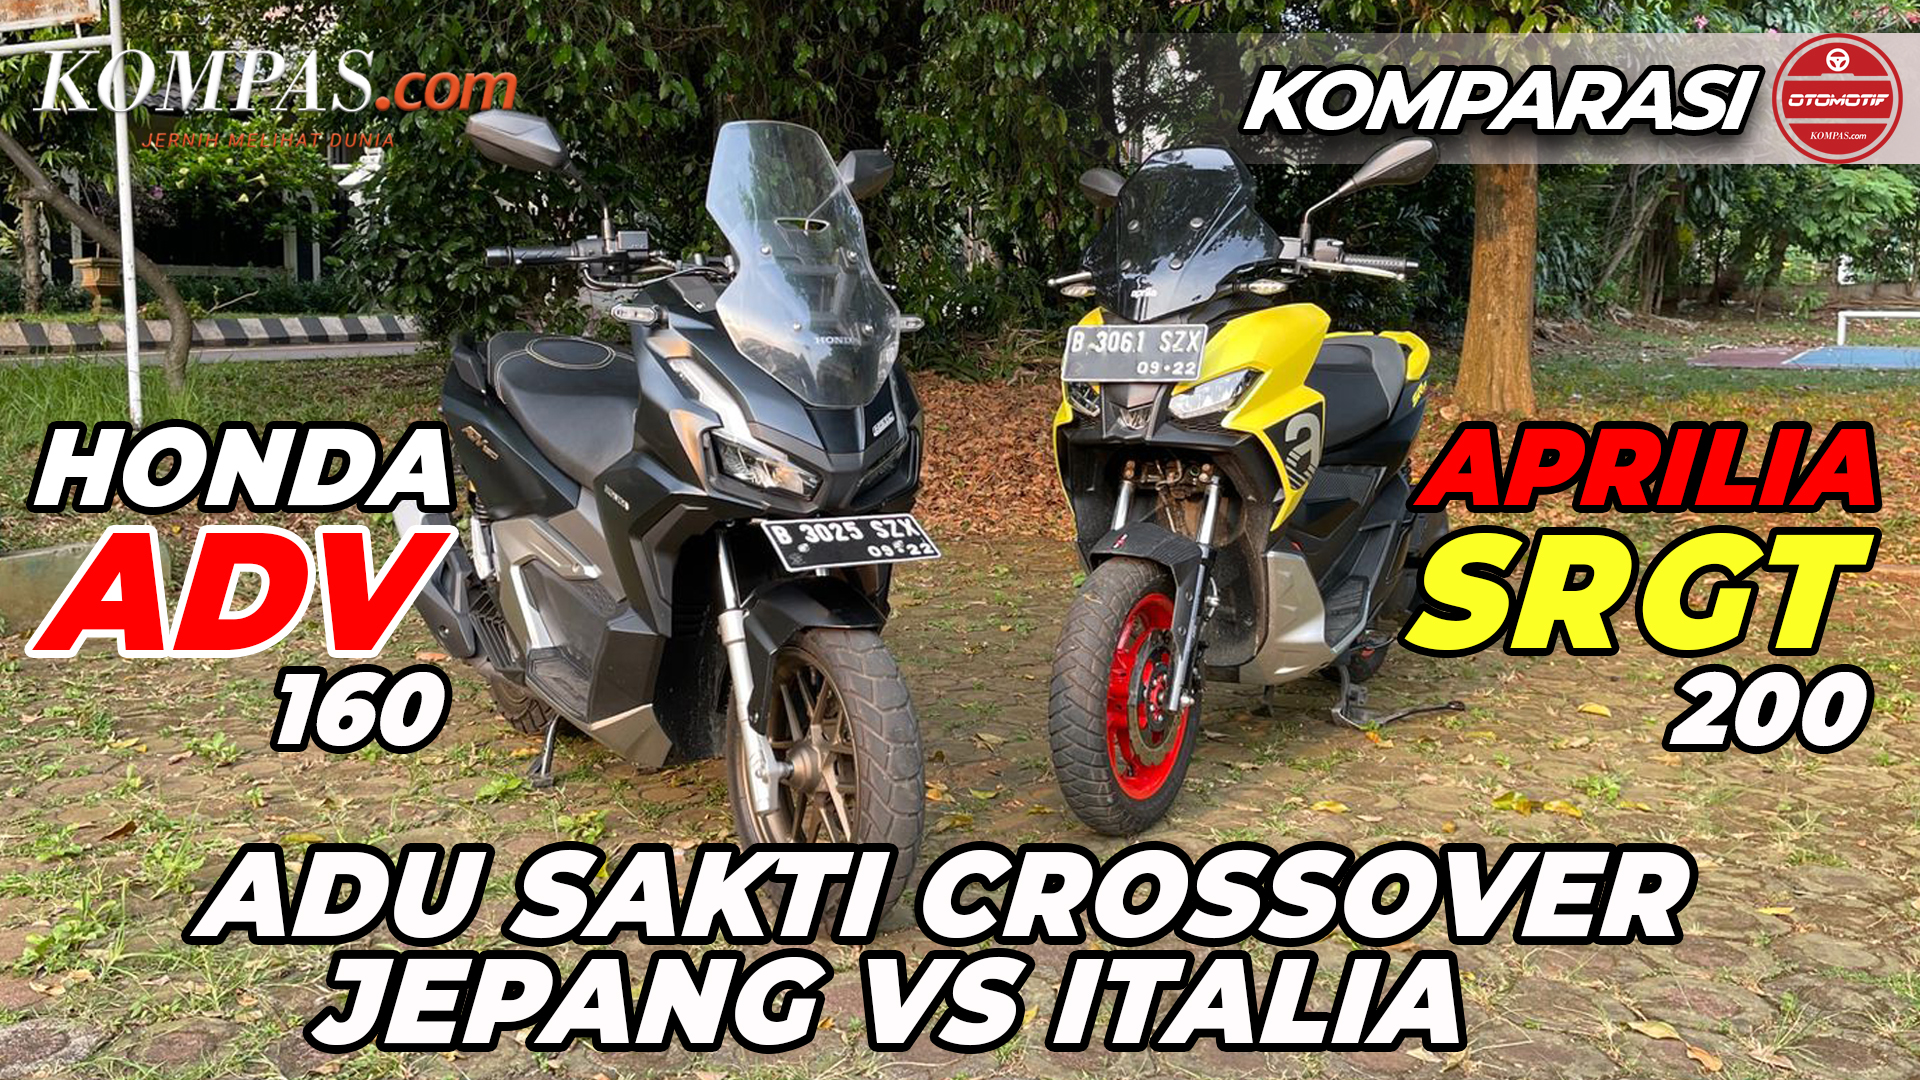 Adu Sakti Crossover Italia vs Jepang | Honda ADV 160 vs Aprilia SR GT 200